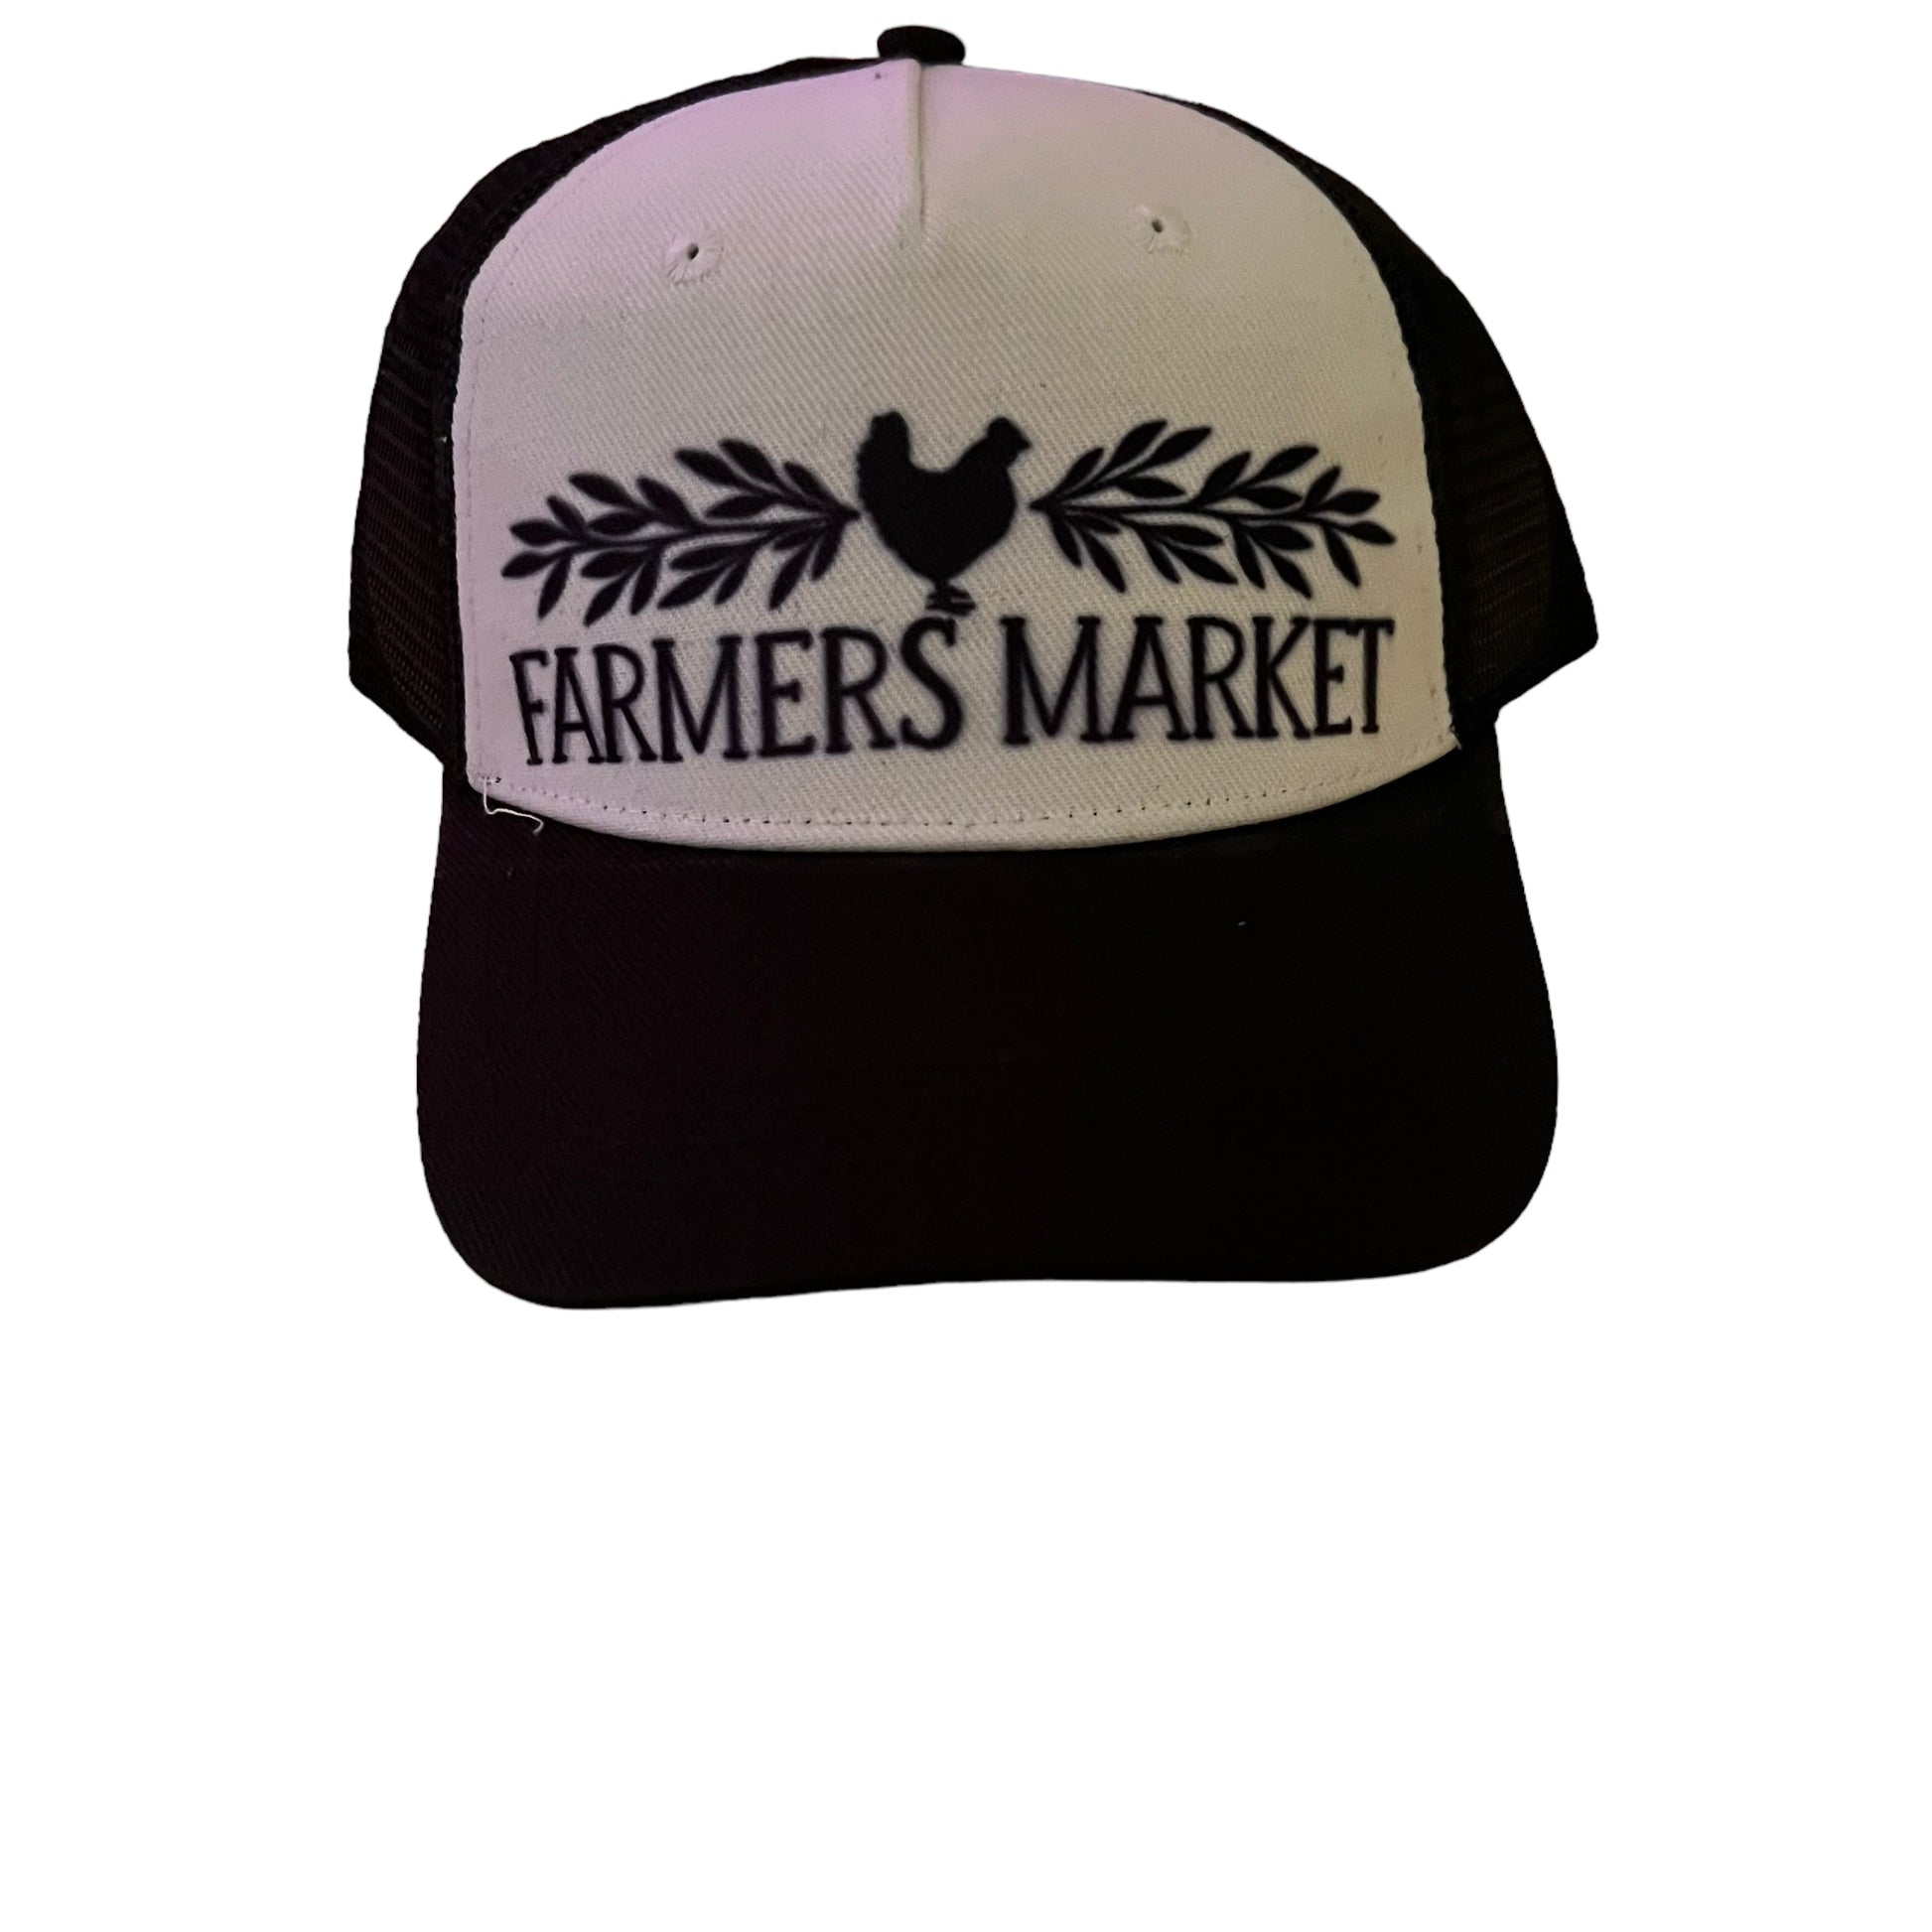 JenDore Farmer's Market Black White Trucker Hat Cap